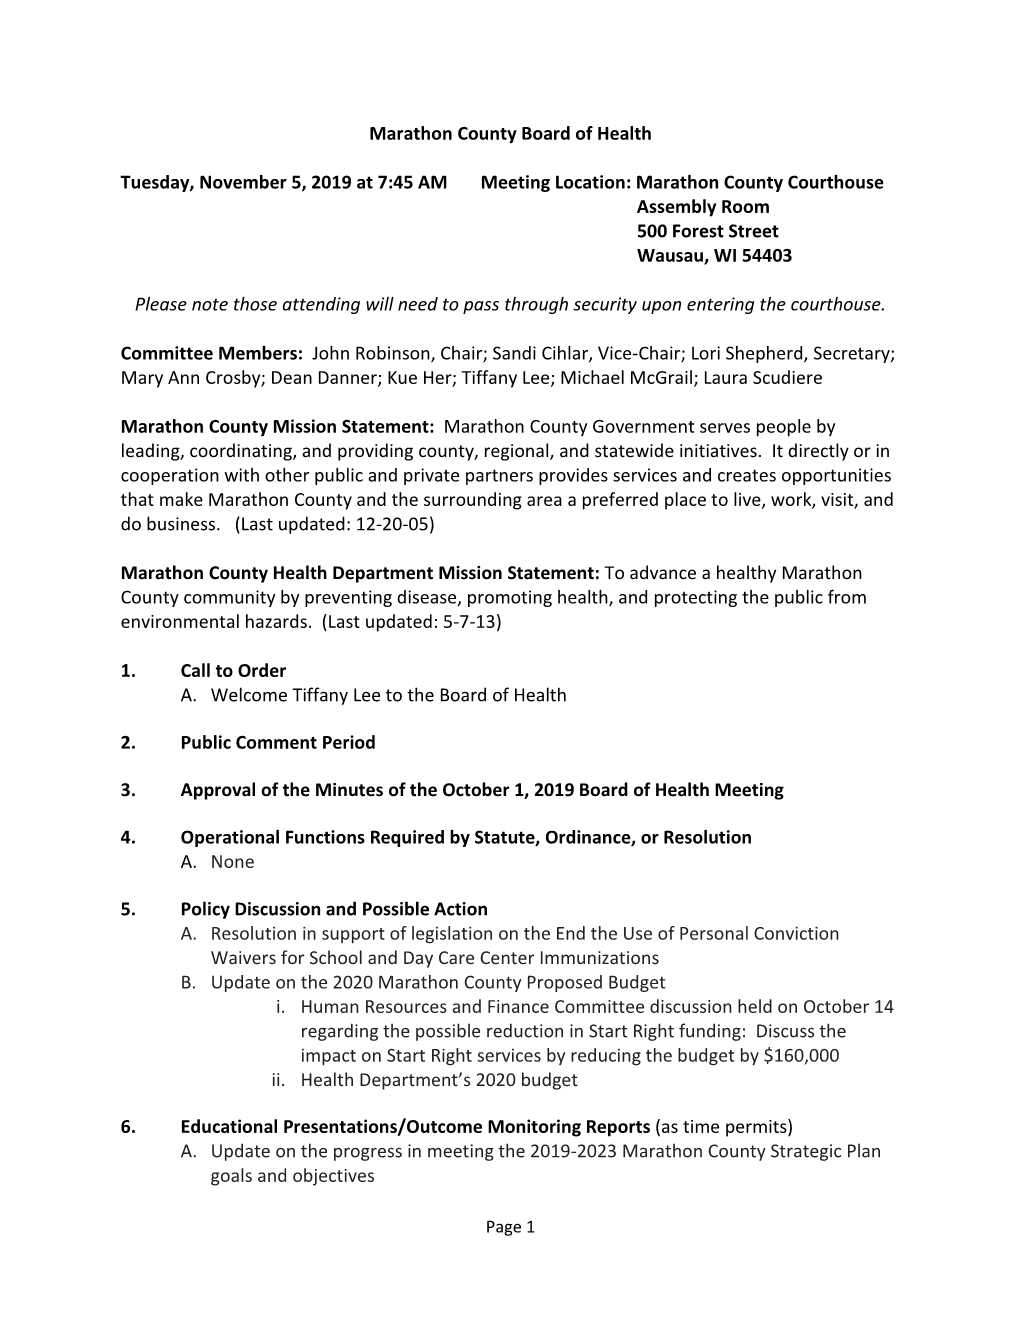 Marathon County Board of Health Tuesday, November 5, 2019 at 7:45